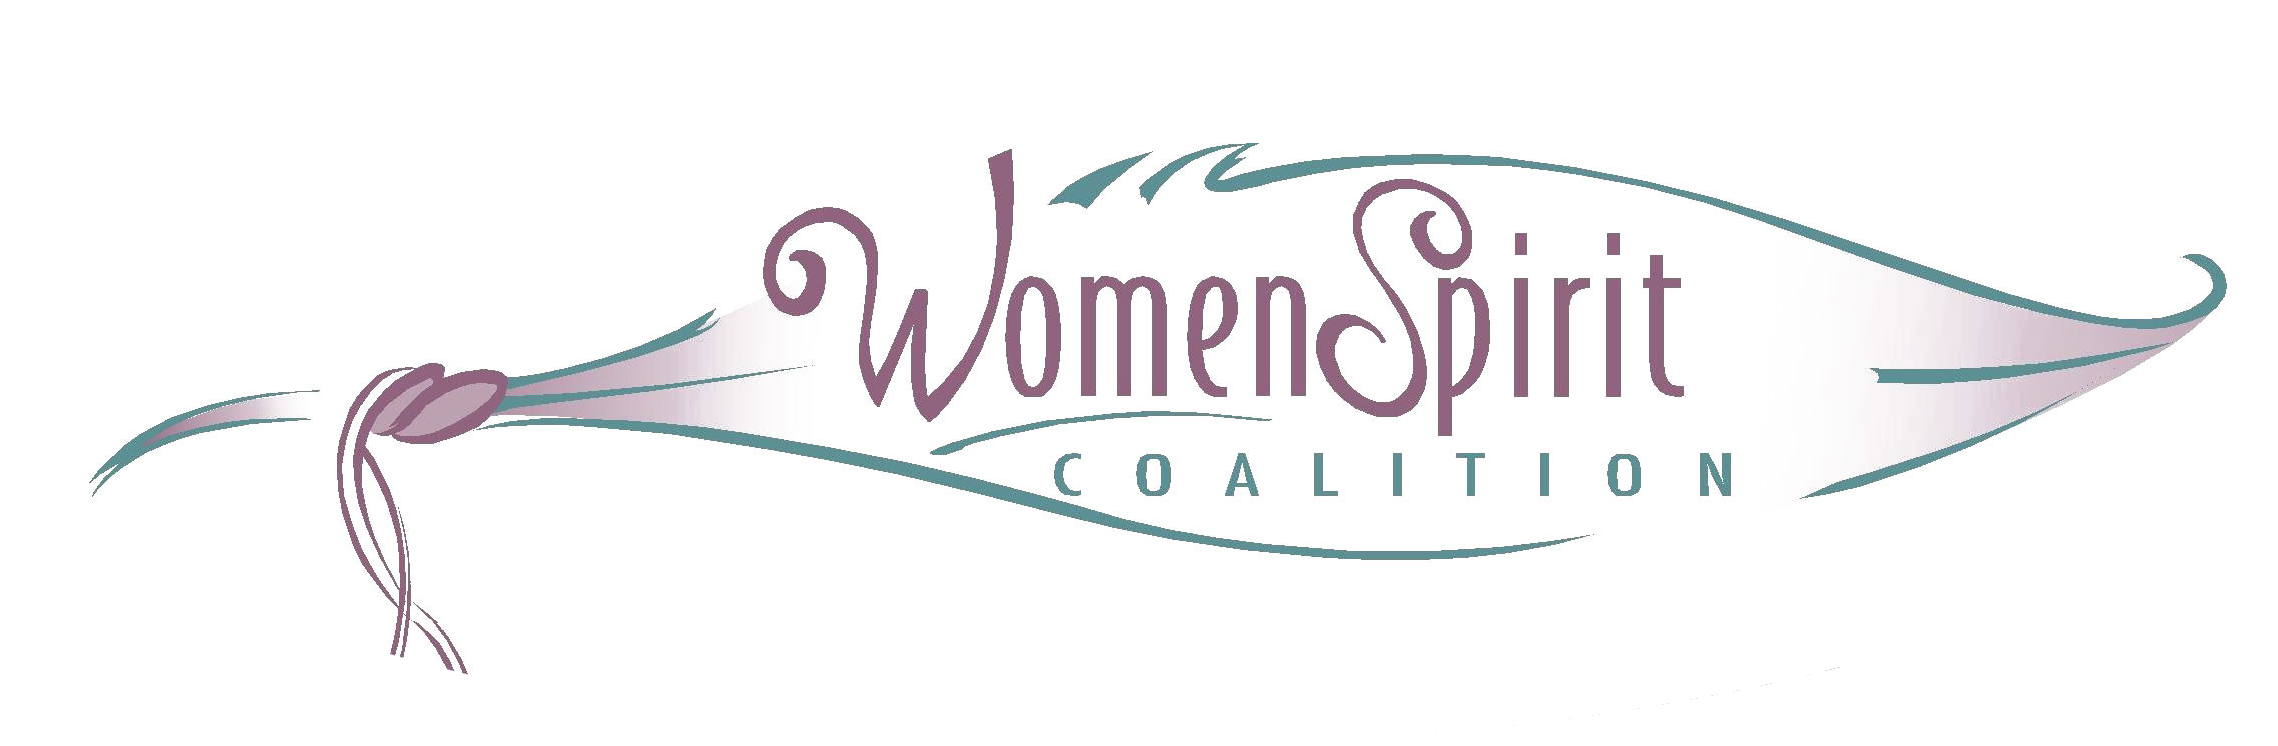 Woman Spirit Coalition